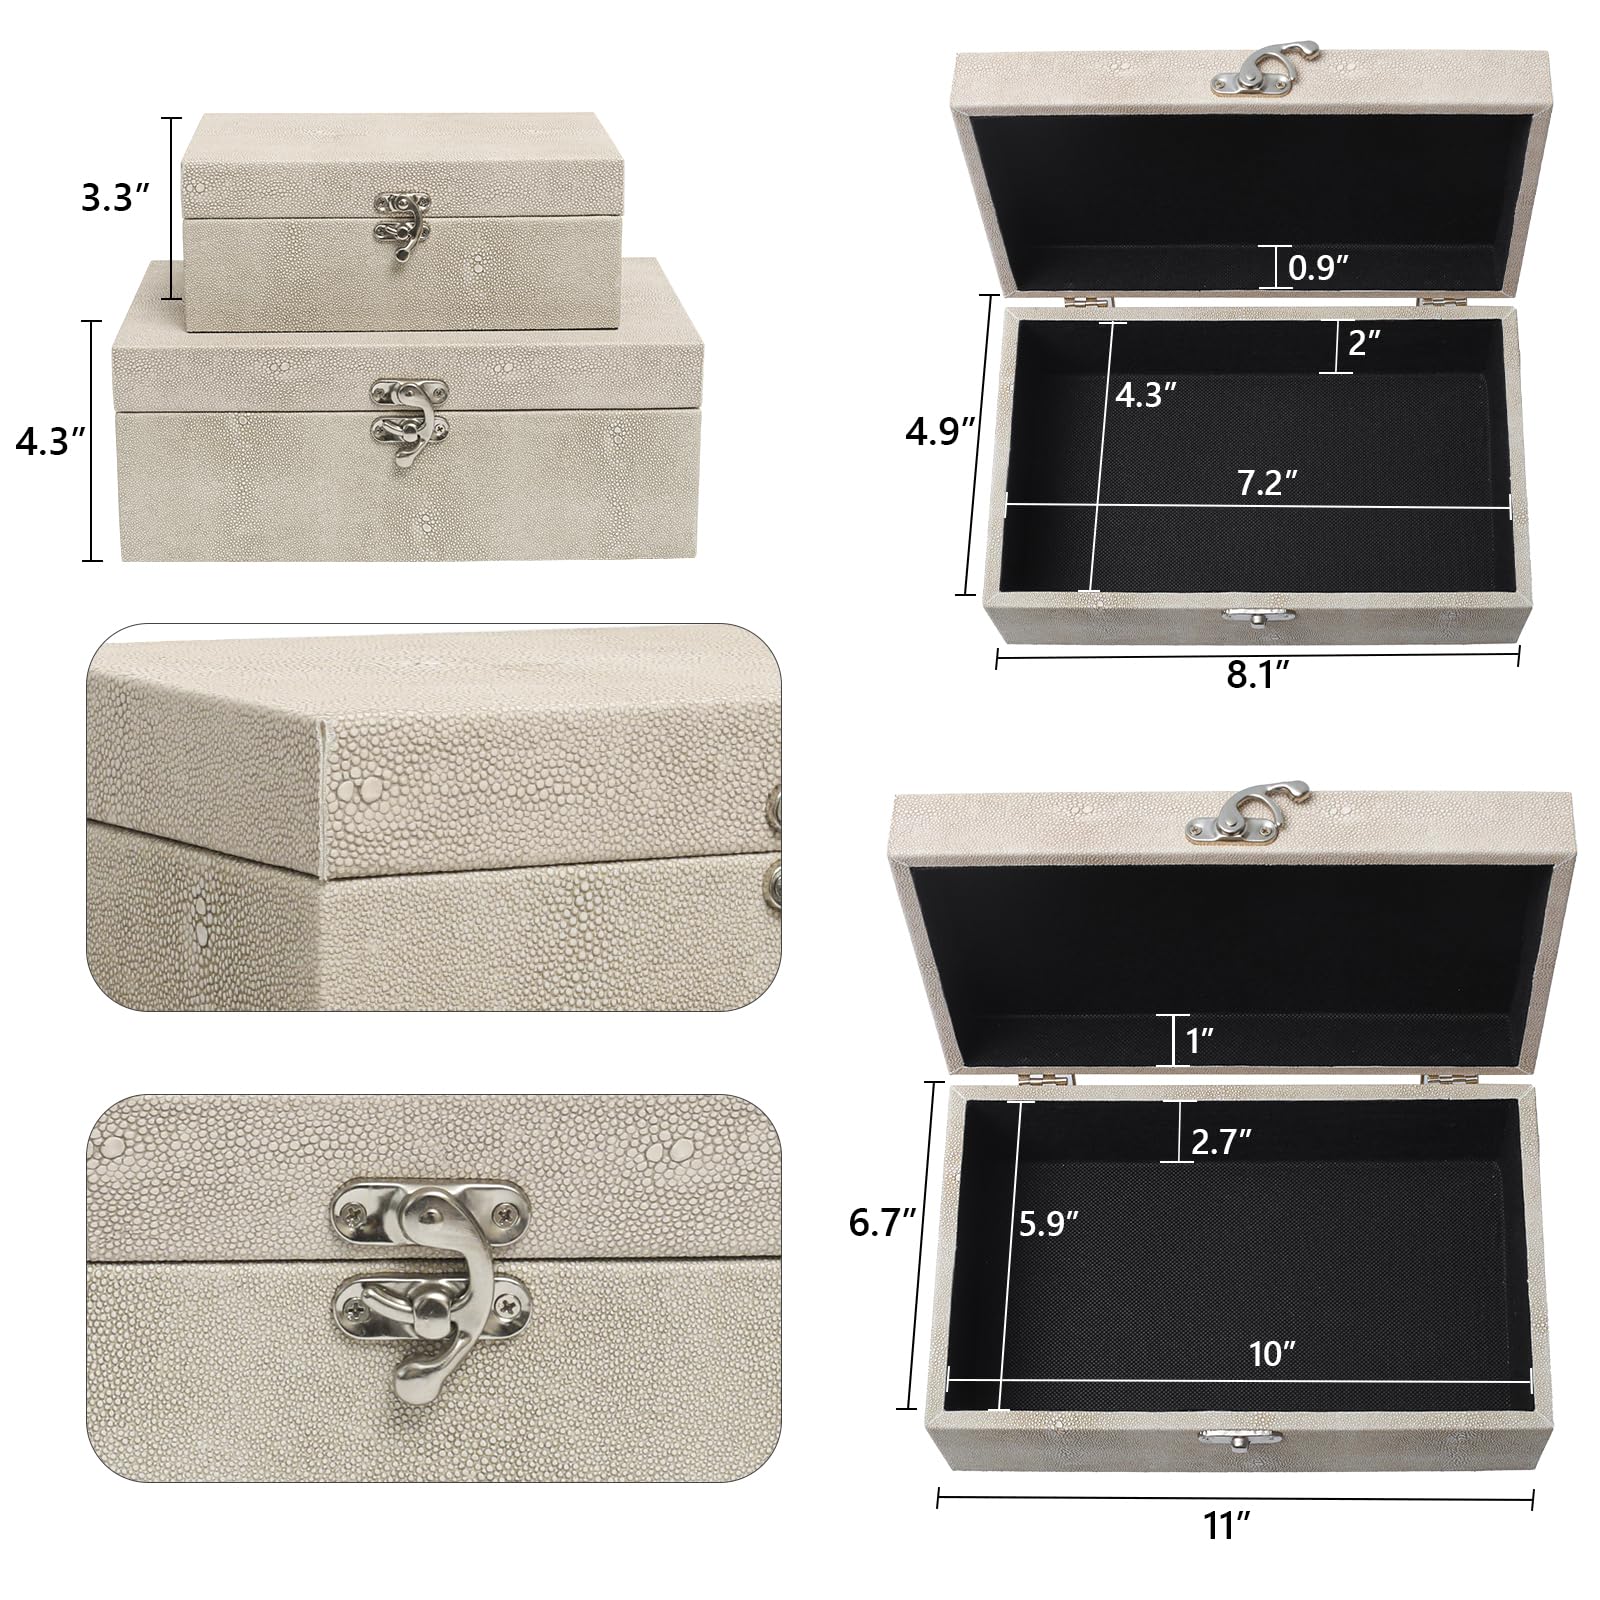 DECOR4SEASON Faux Shagreen Leather Decorative Storage Boxes Set of 2, Ivory